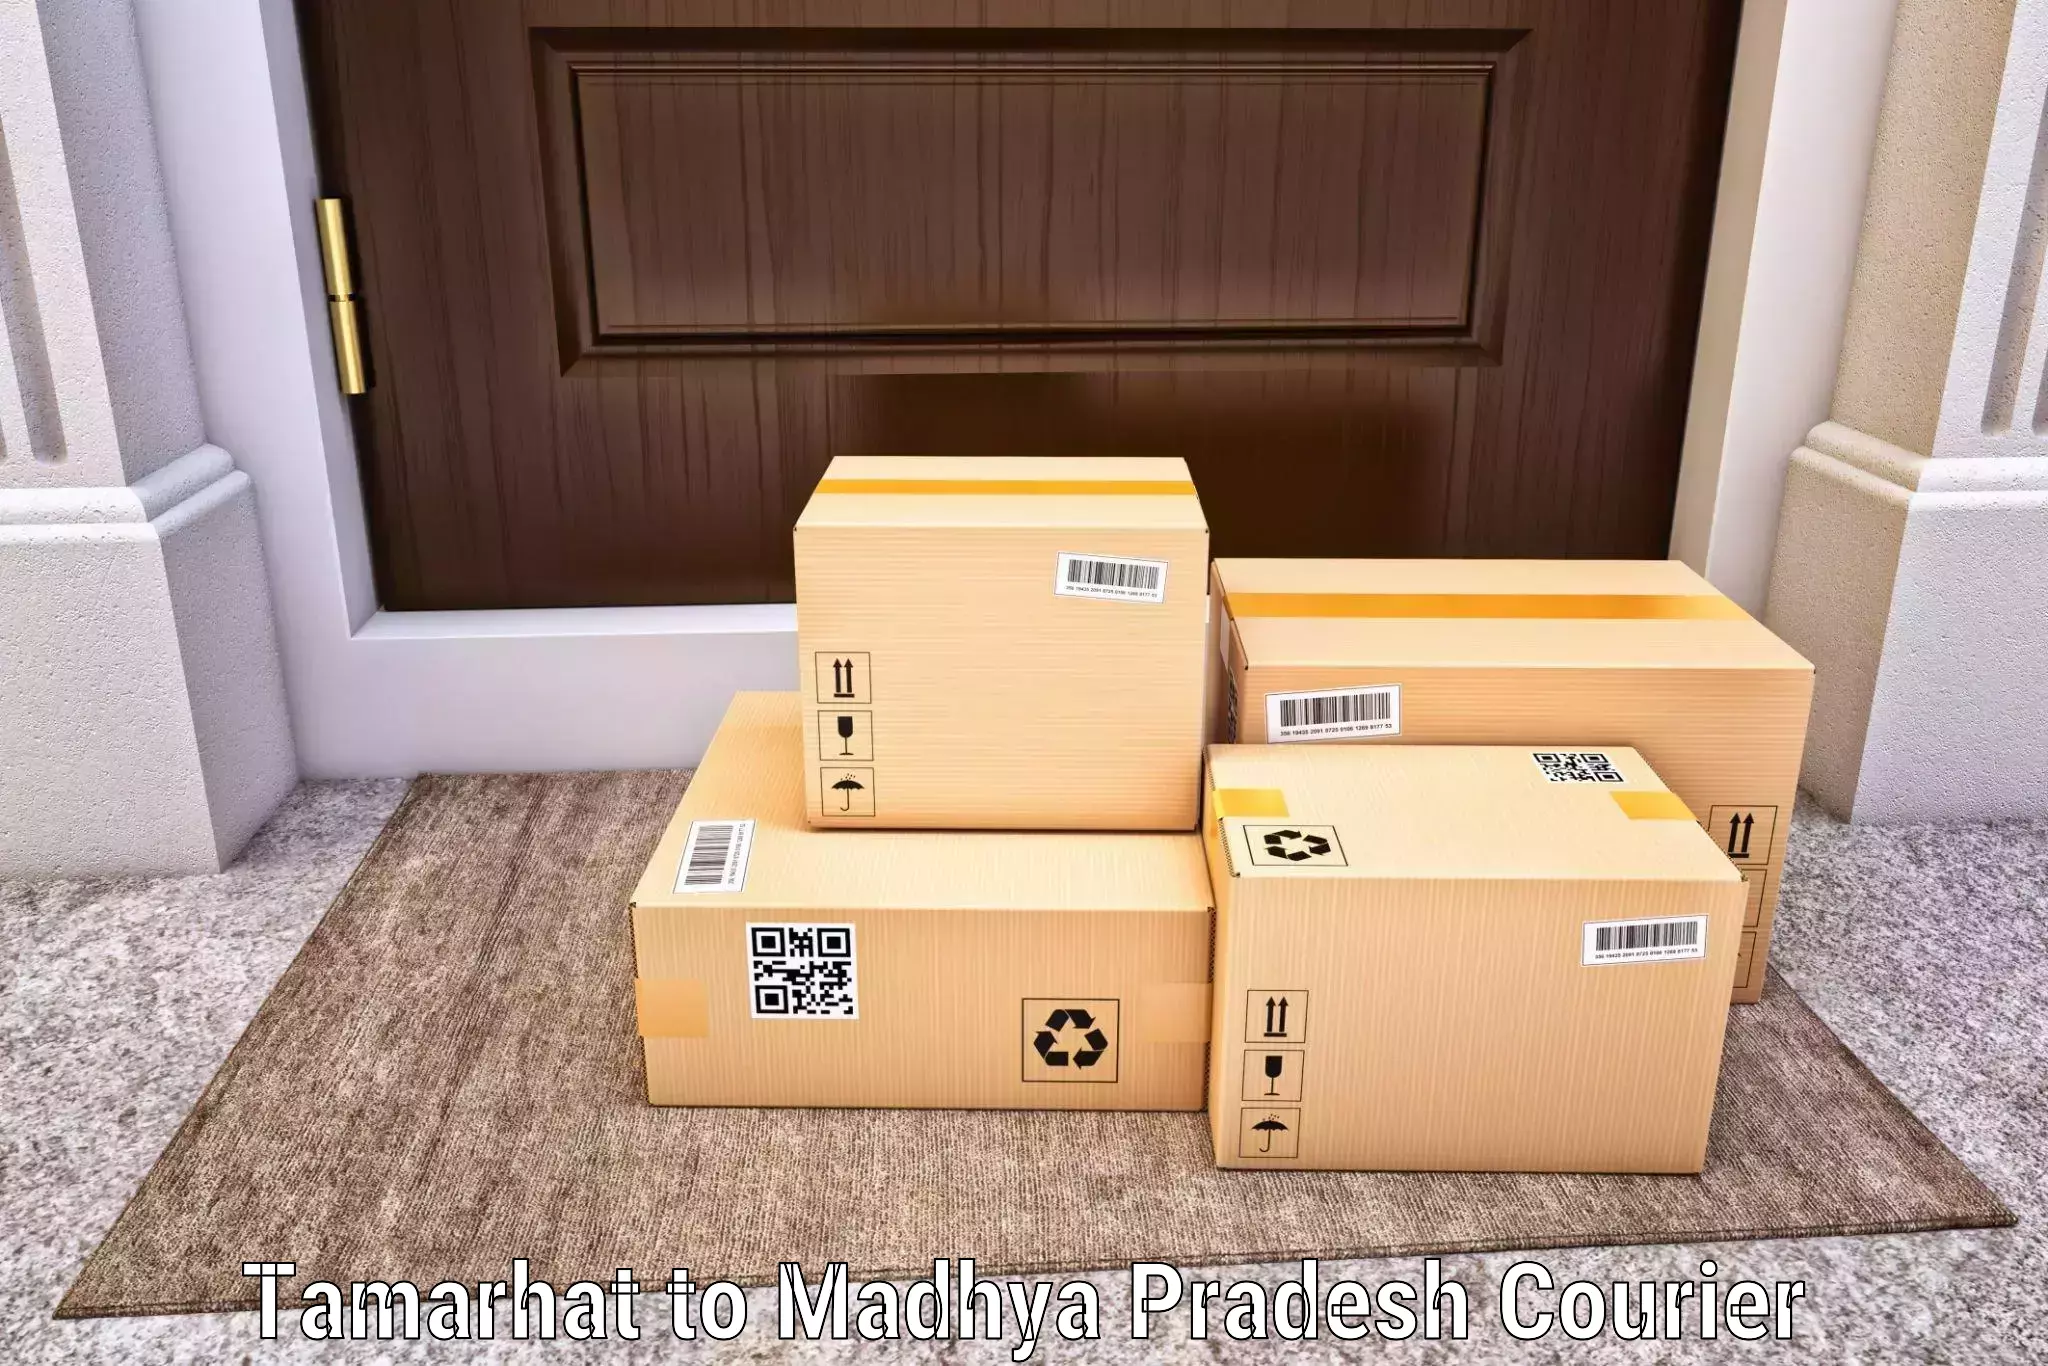 Cargo delivery service Tamarhat to Mundi